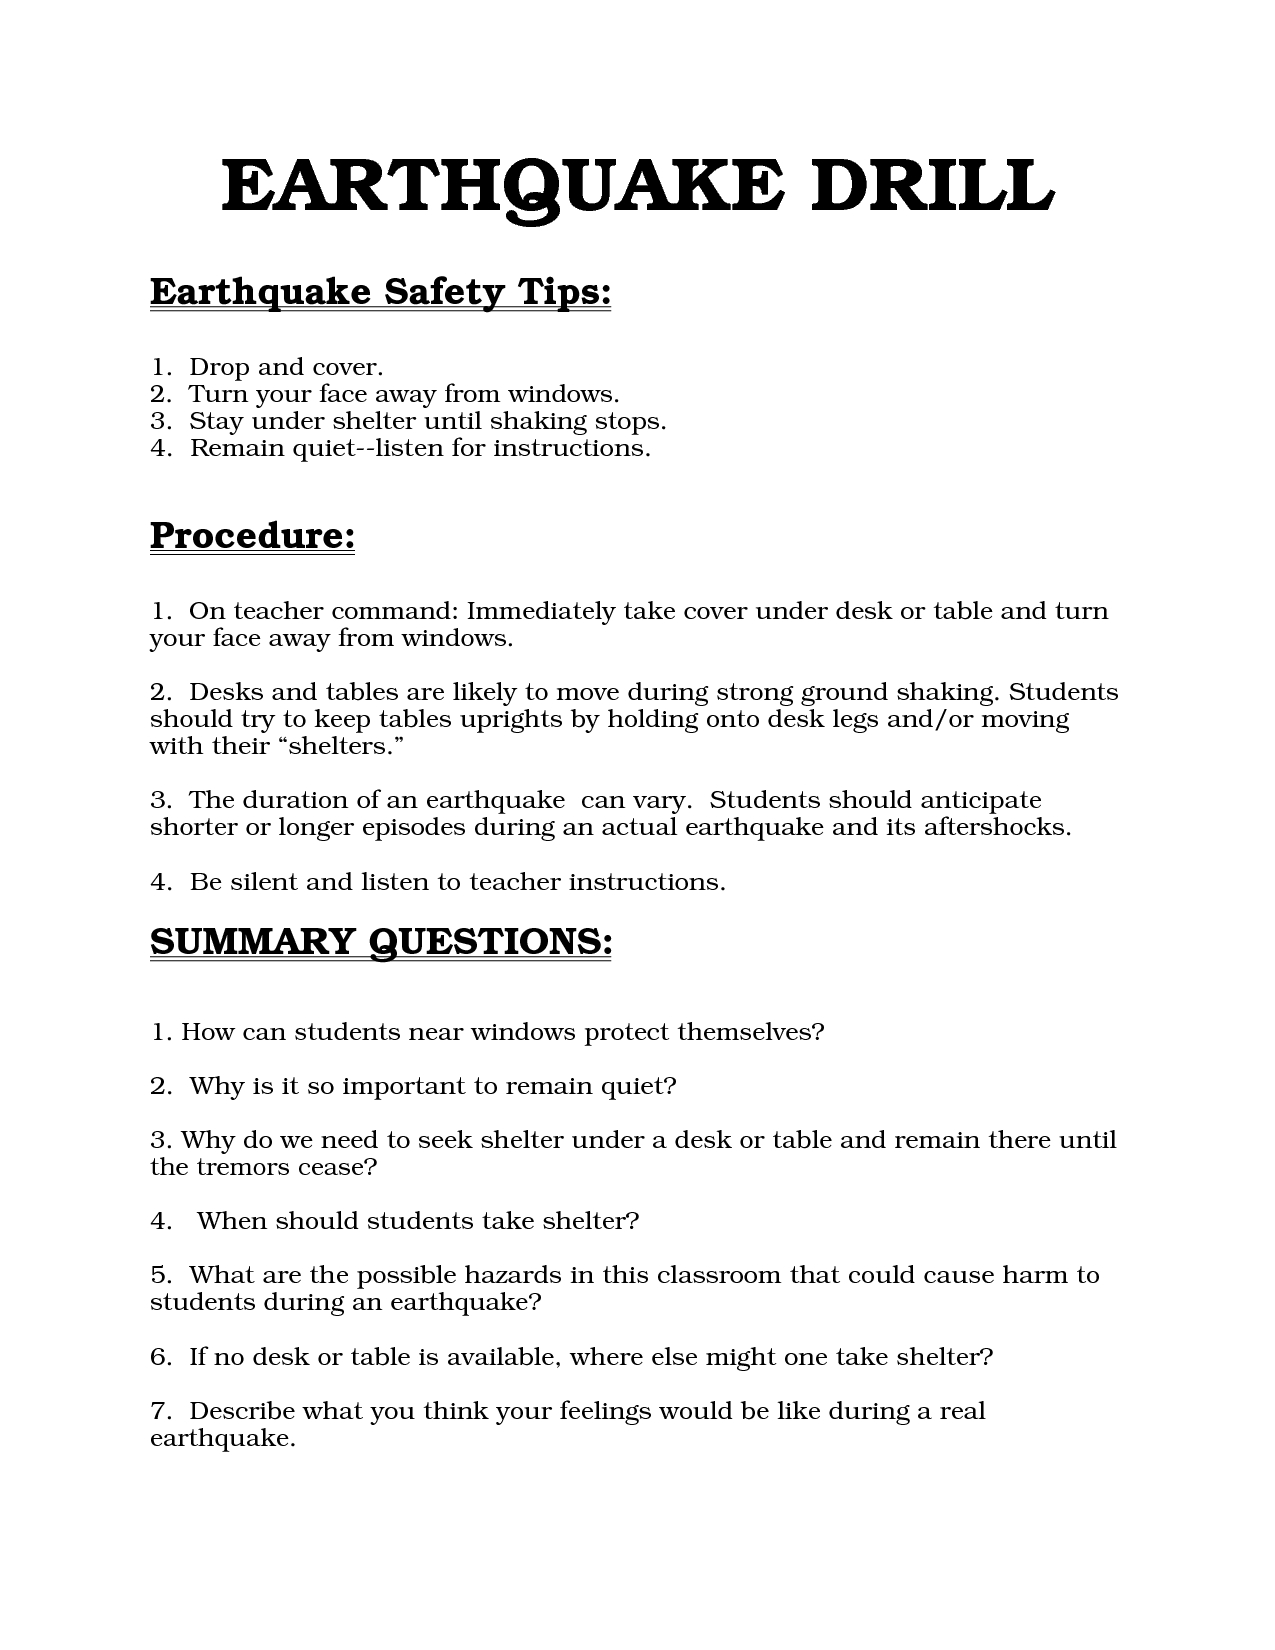 Earthquake Drill Procedures | Earthquake Drill | Education